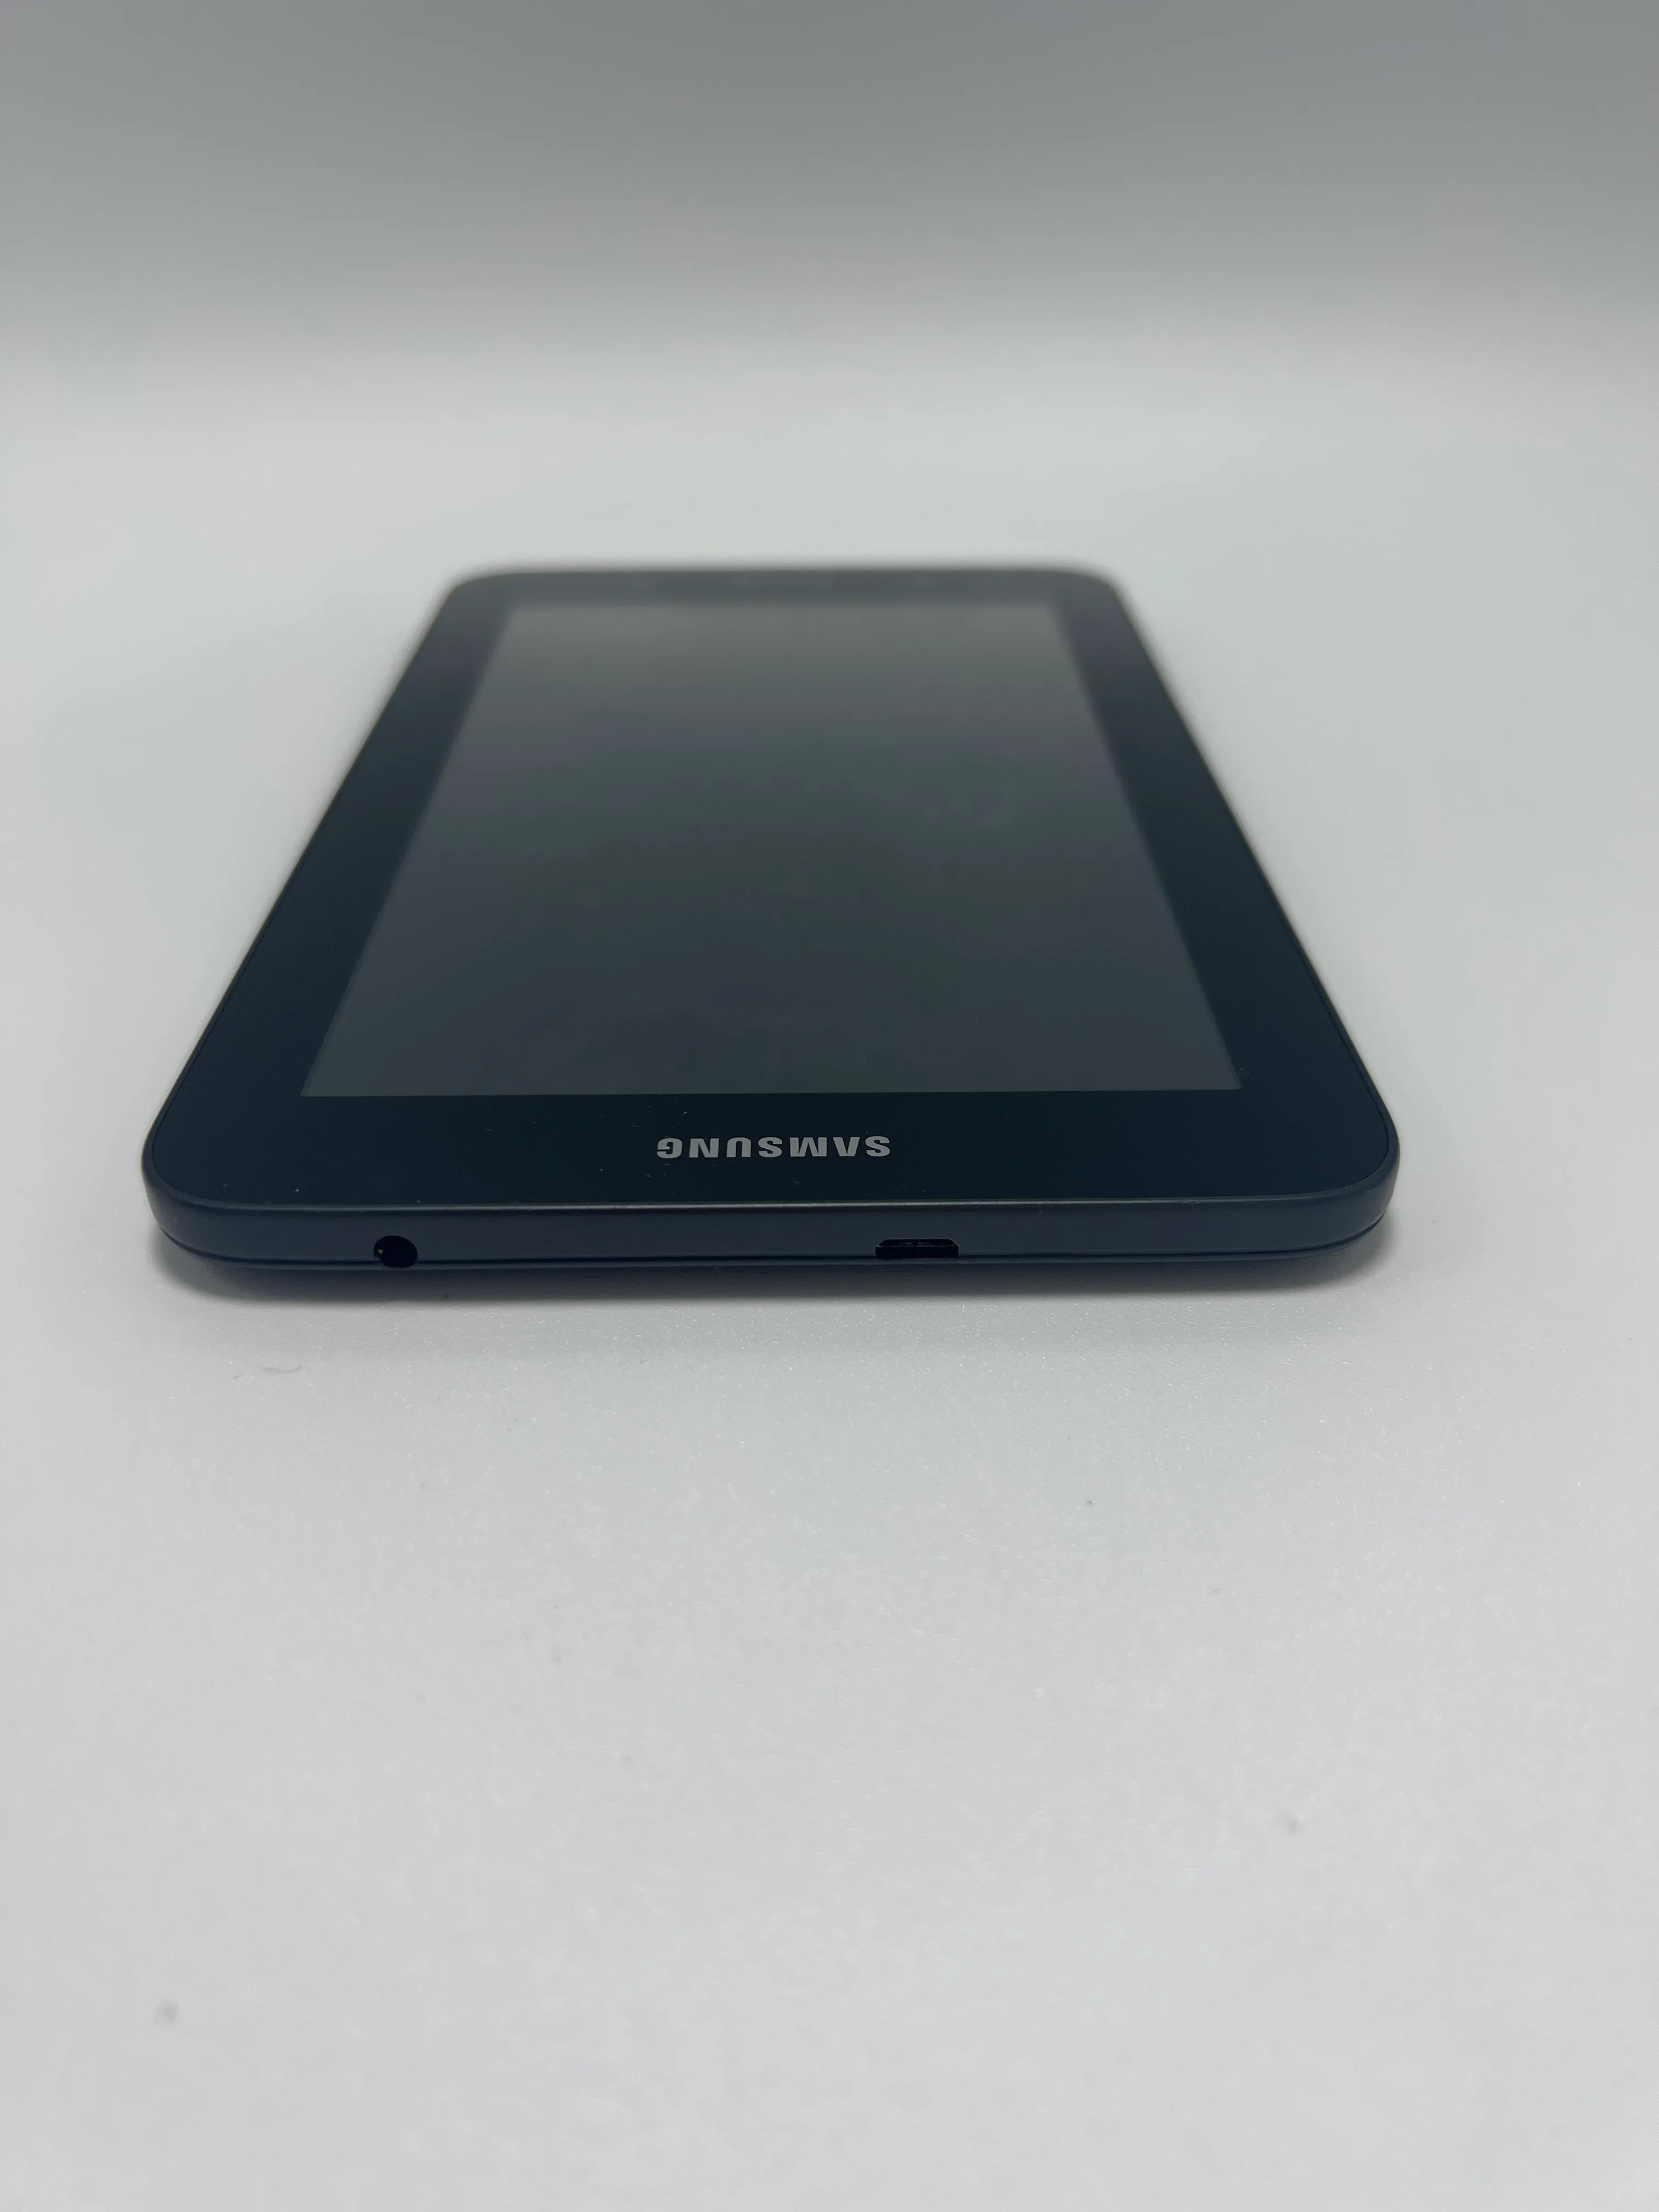 Samsung Galaxy Tab 3 LITE 7.0 media